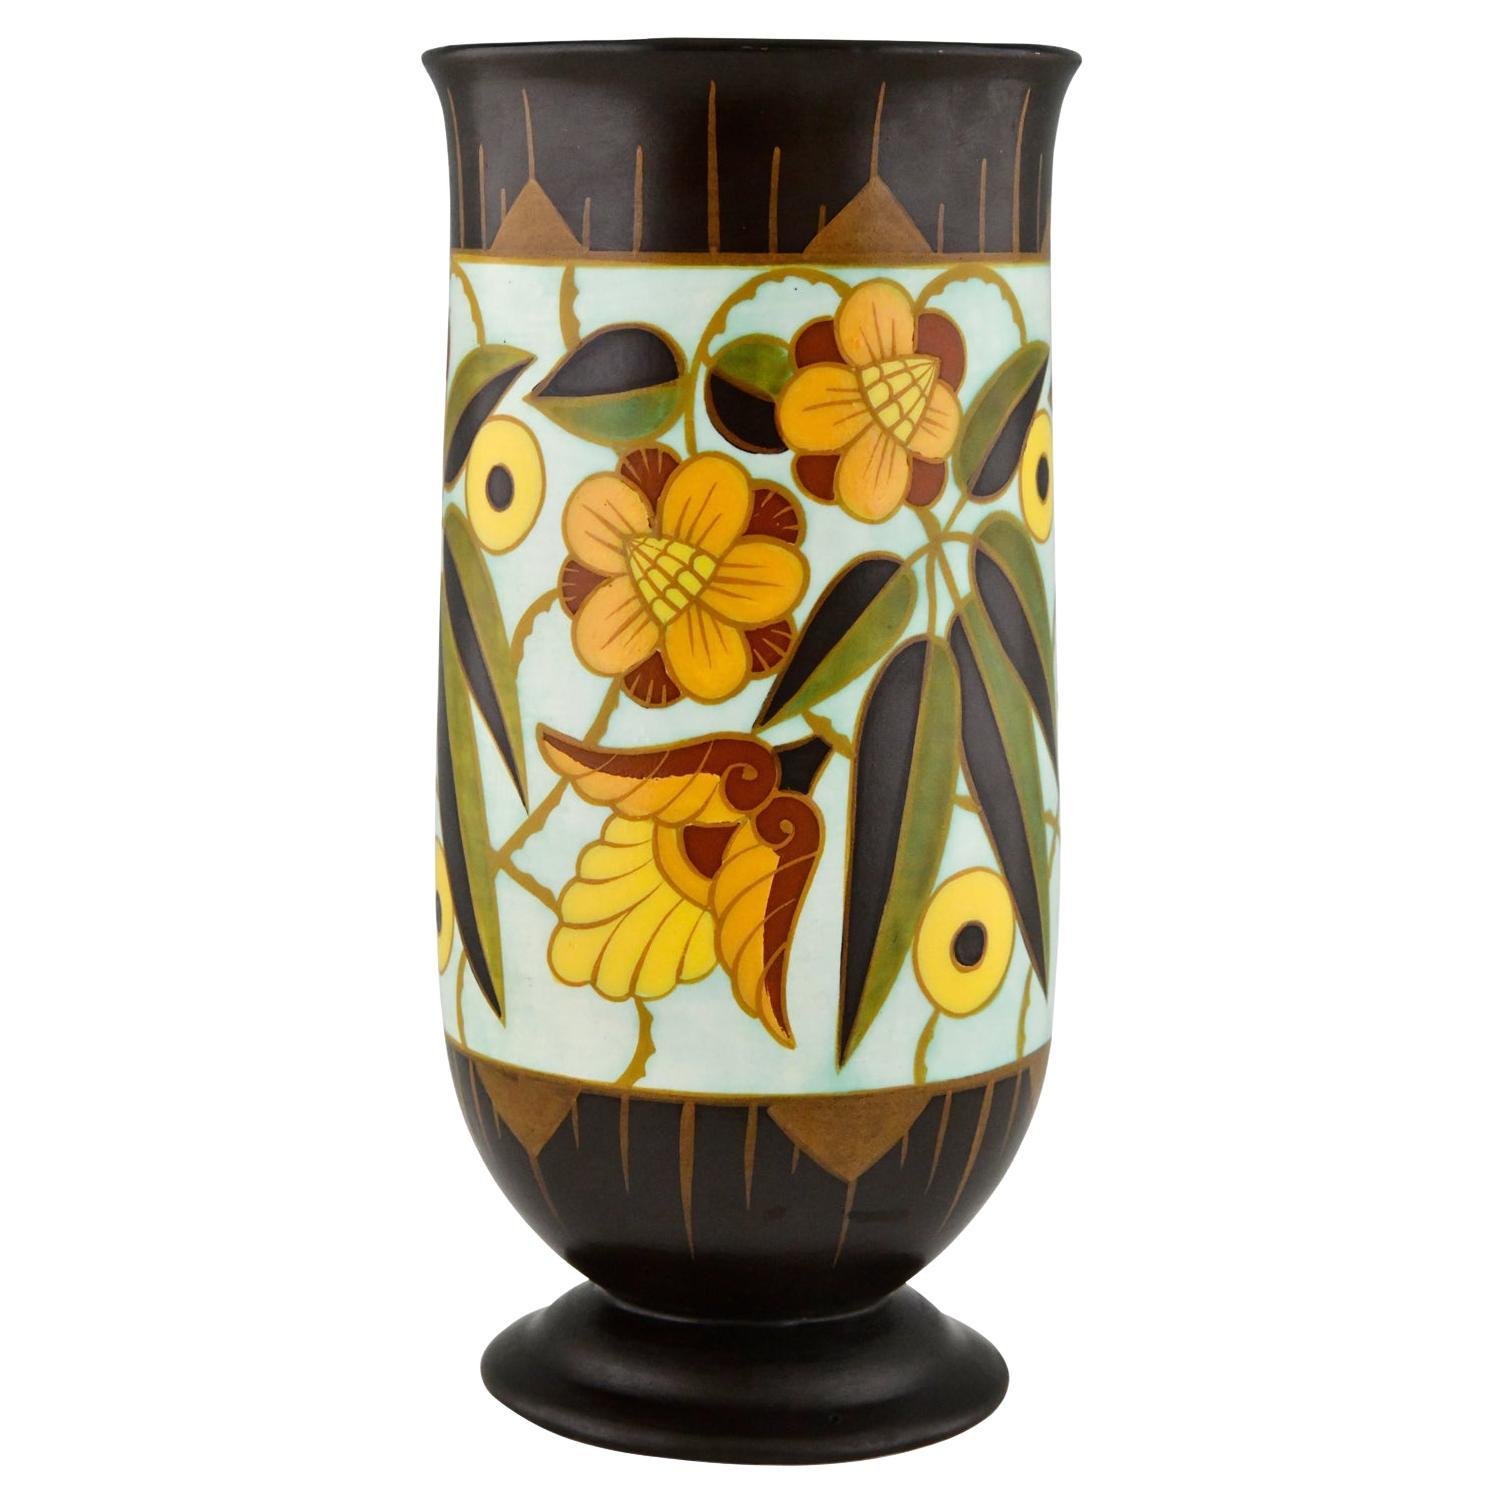 Art Deco ceramic vase with flowers by Boch Frères, Keramis 1934